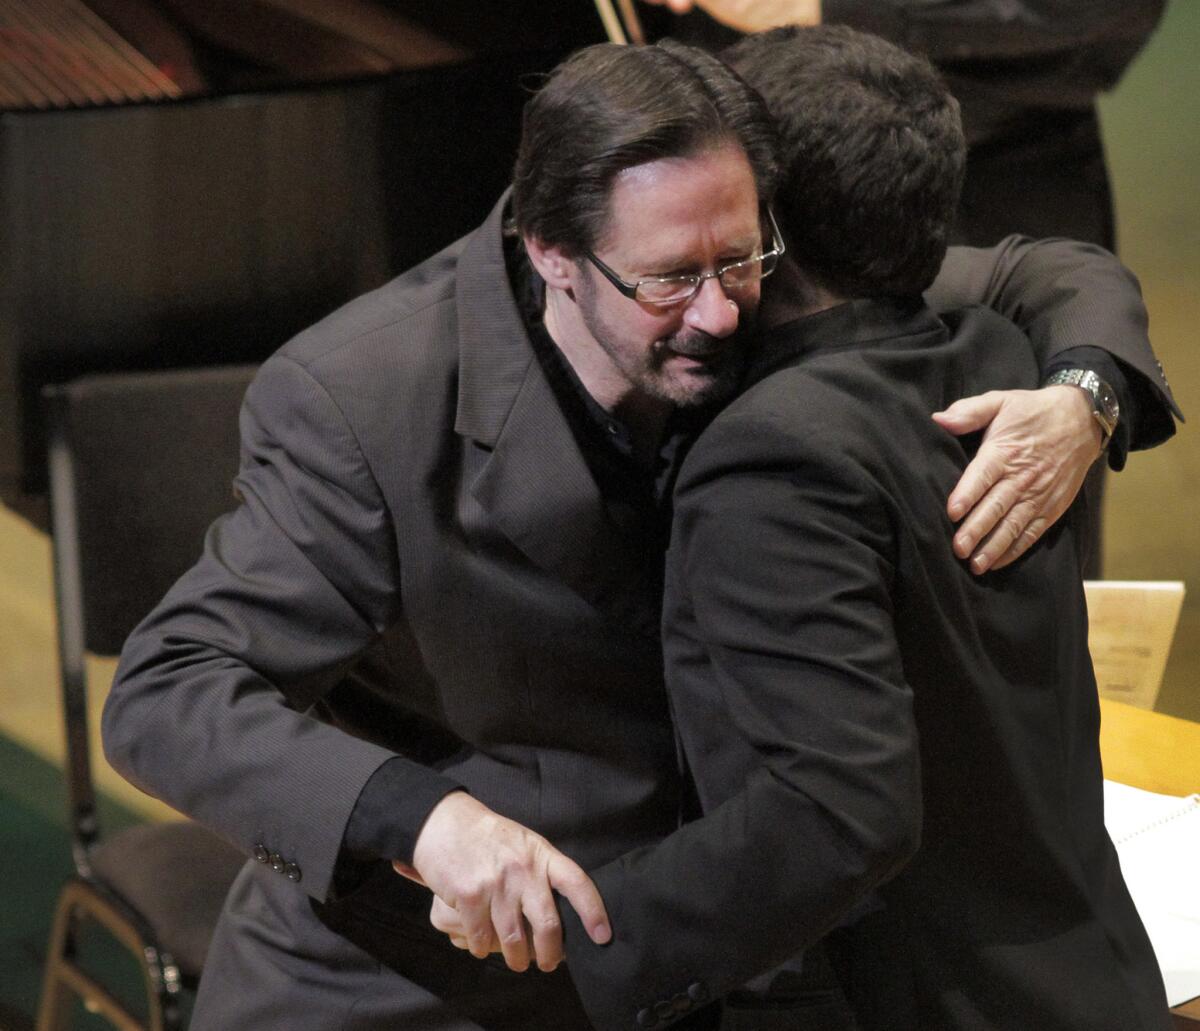 Steven Stucky, left, embraces conductor Lionel Bringuier during a 2012 concert at Walt Disney Concert Hall in Los Angeles.